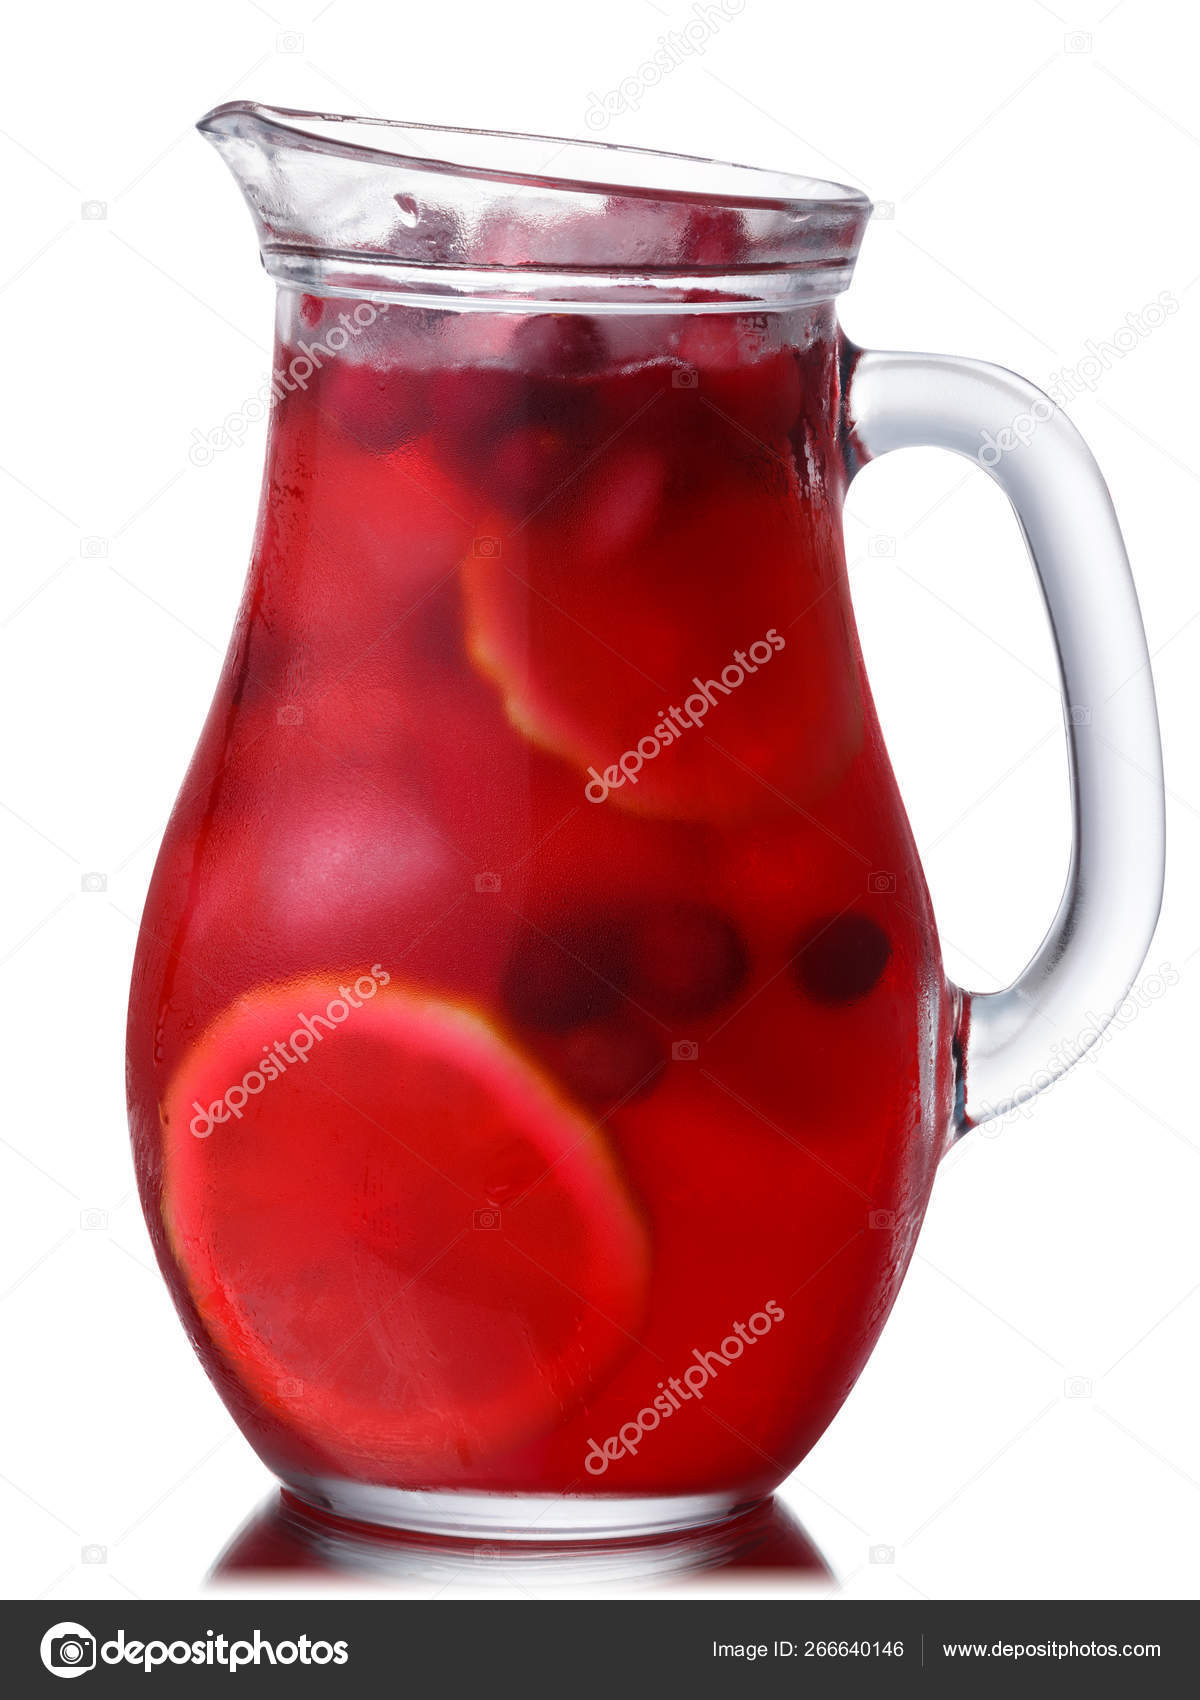 https://st4.depositphotos.com/3147771/26664/i/1600/depositphotos_266640146-stock-photo-iced-cranberry-lemon-drink-pitcher.jpg